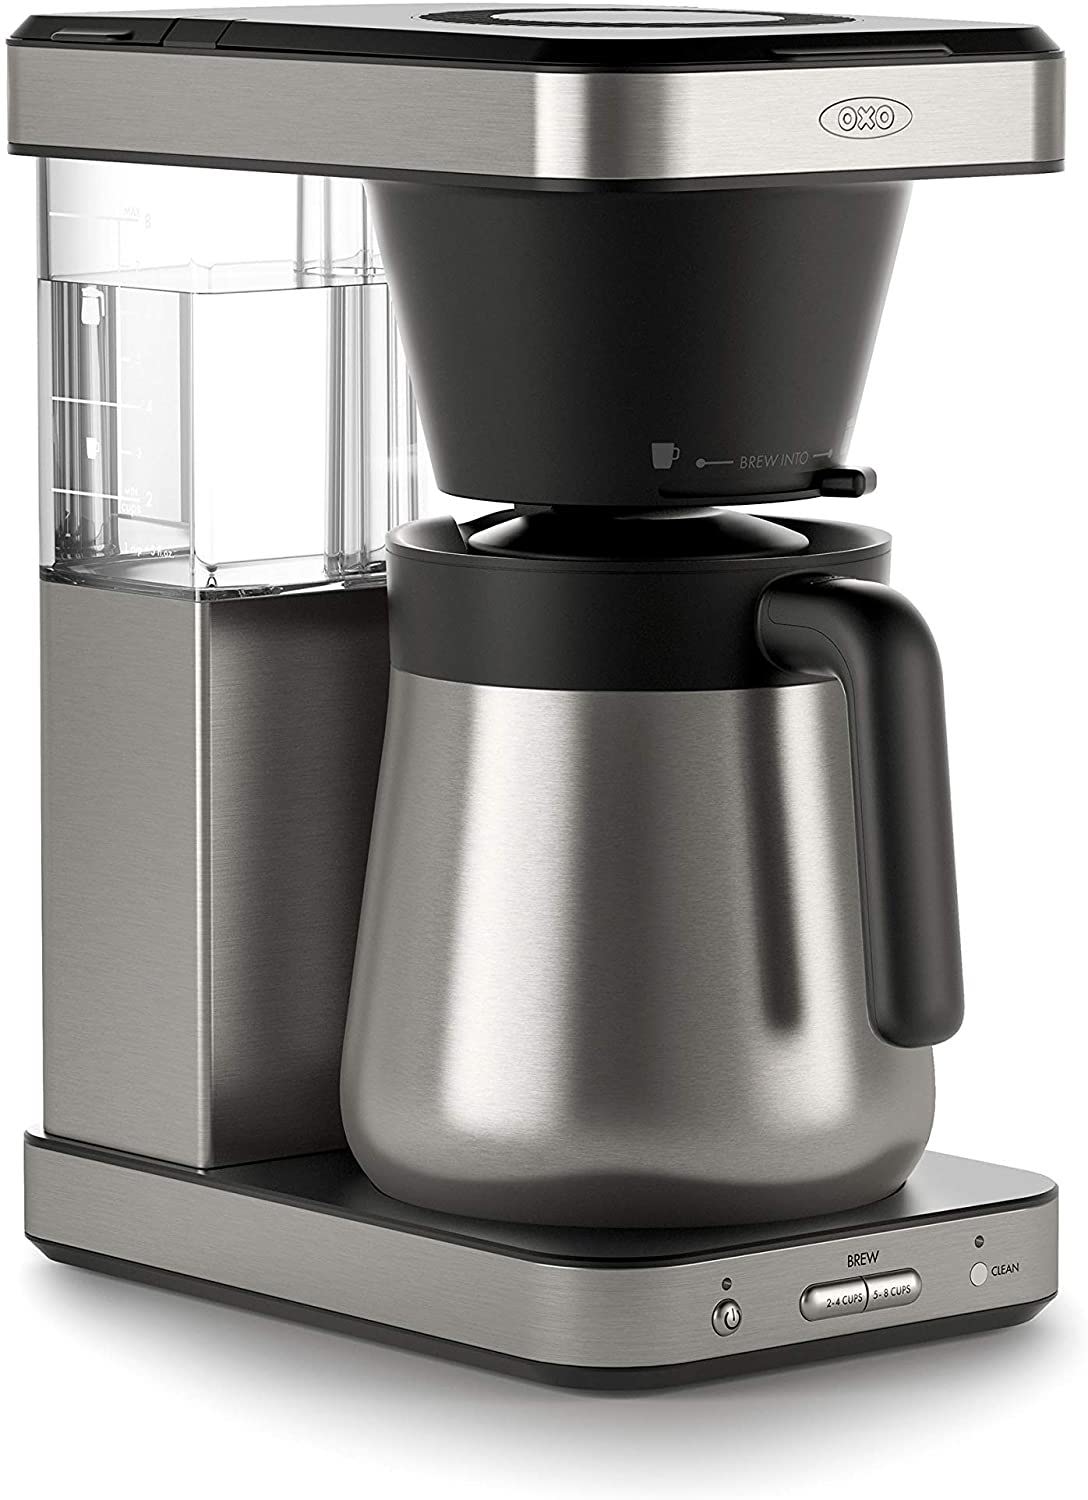 Introducing the Braun MultiServe Coffee Maker